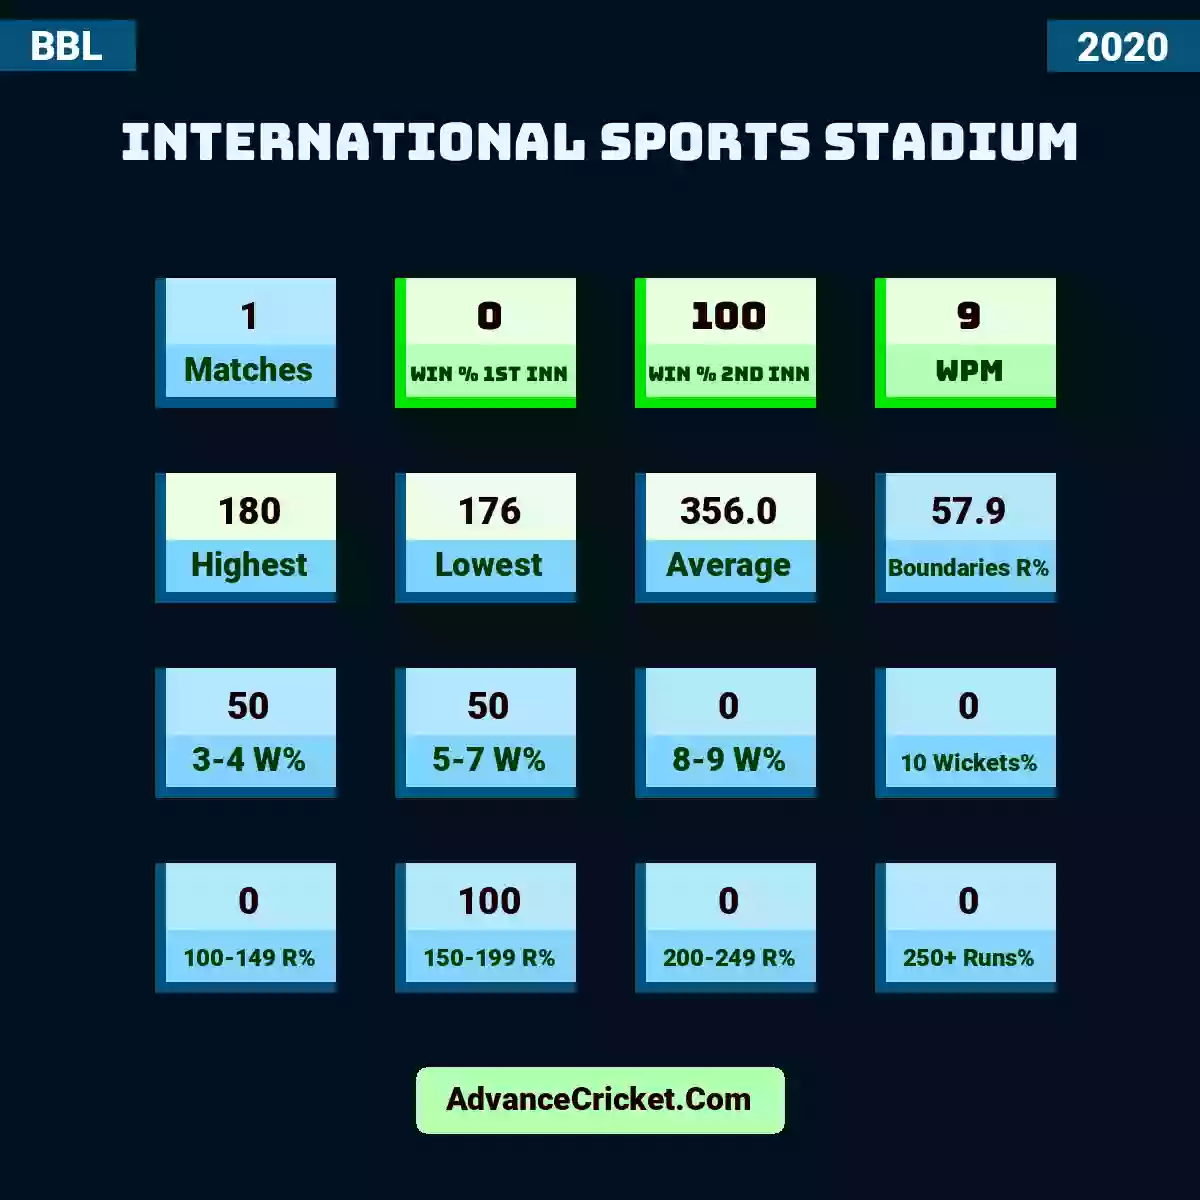 Image showing International Sports Stadium with Matches: 1, Win % 1st Inn: 0, Win % 2nd Inn: 100, WPM: 9, Highest: 180, Lowest: 176, Average: 356.0, Boundaries R%: 57.9, 3-4 W%: 50, 5-7 W%: 50, 8-9 W%: 0, 10 Wickets%: 0, 100-149 R%: 0, 150-199 R%: 100, 200-249 R%: 0, 250+ Runs%: 0.